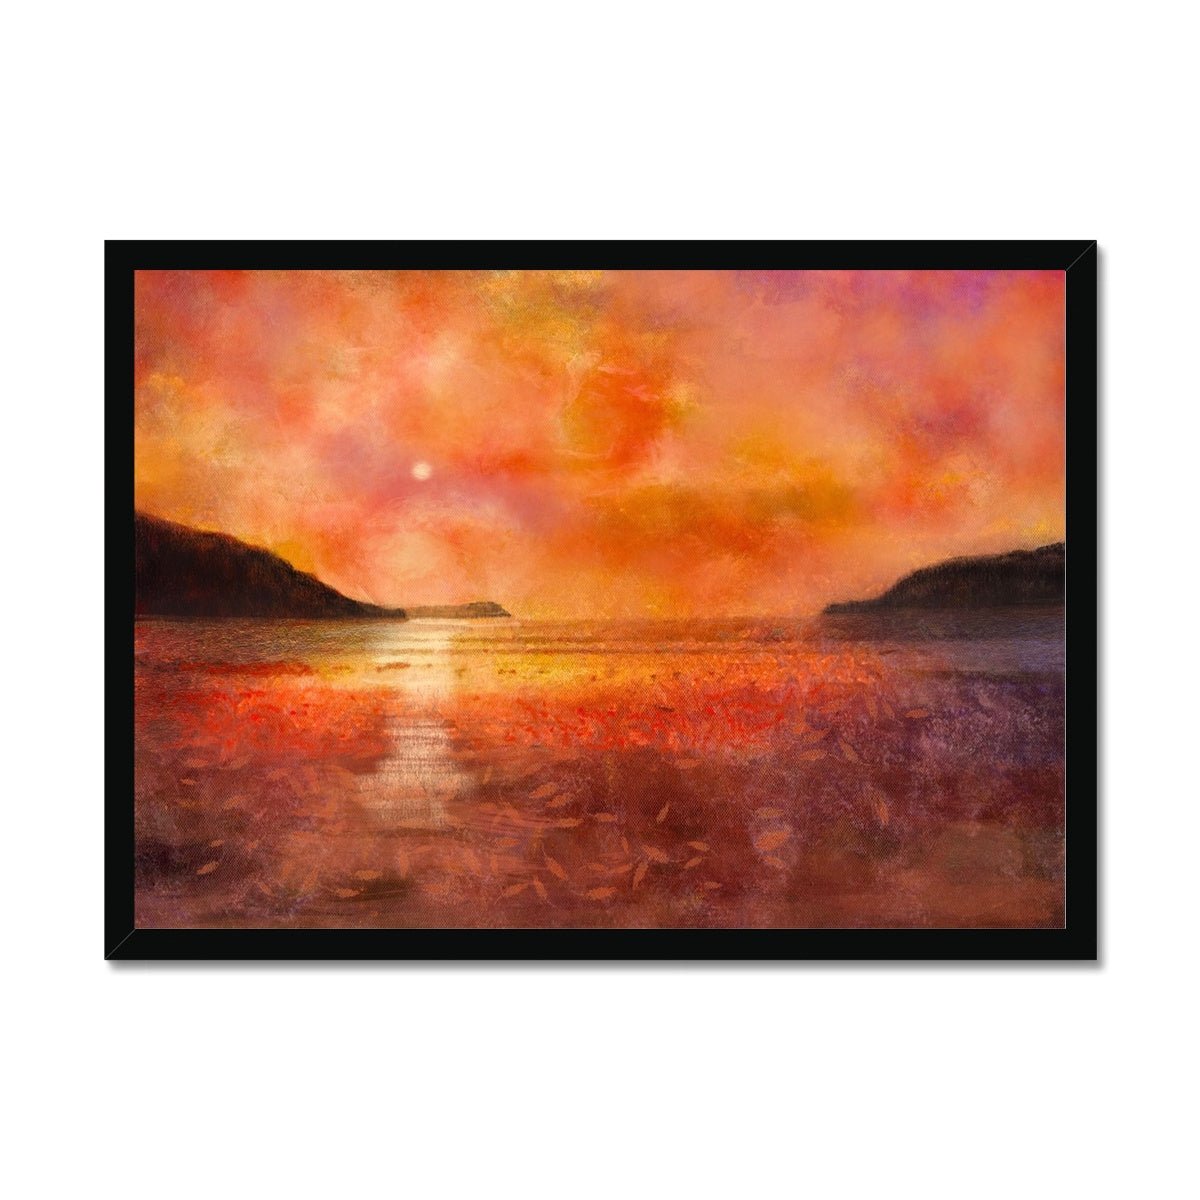 Calgary Beach Sunset Mull Painting | Framed Prints From Scotland-Framed Prints-Hebridean Islands Art Gallery-A2 Landscape-Black Frame-Paintings, Prints, Homeware, Art Gifts From Scotland By Scottish Artist Kevin Hunter